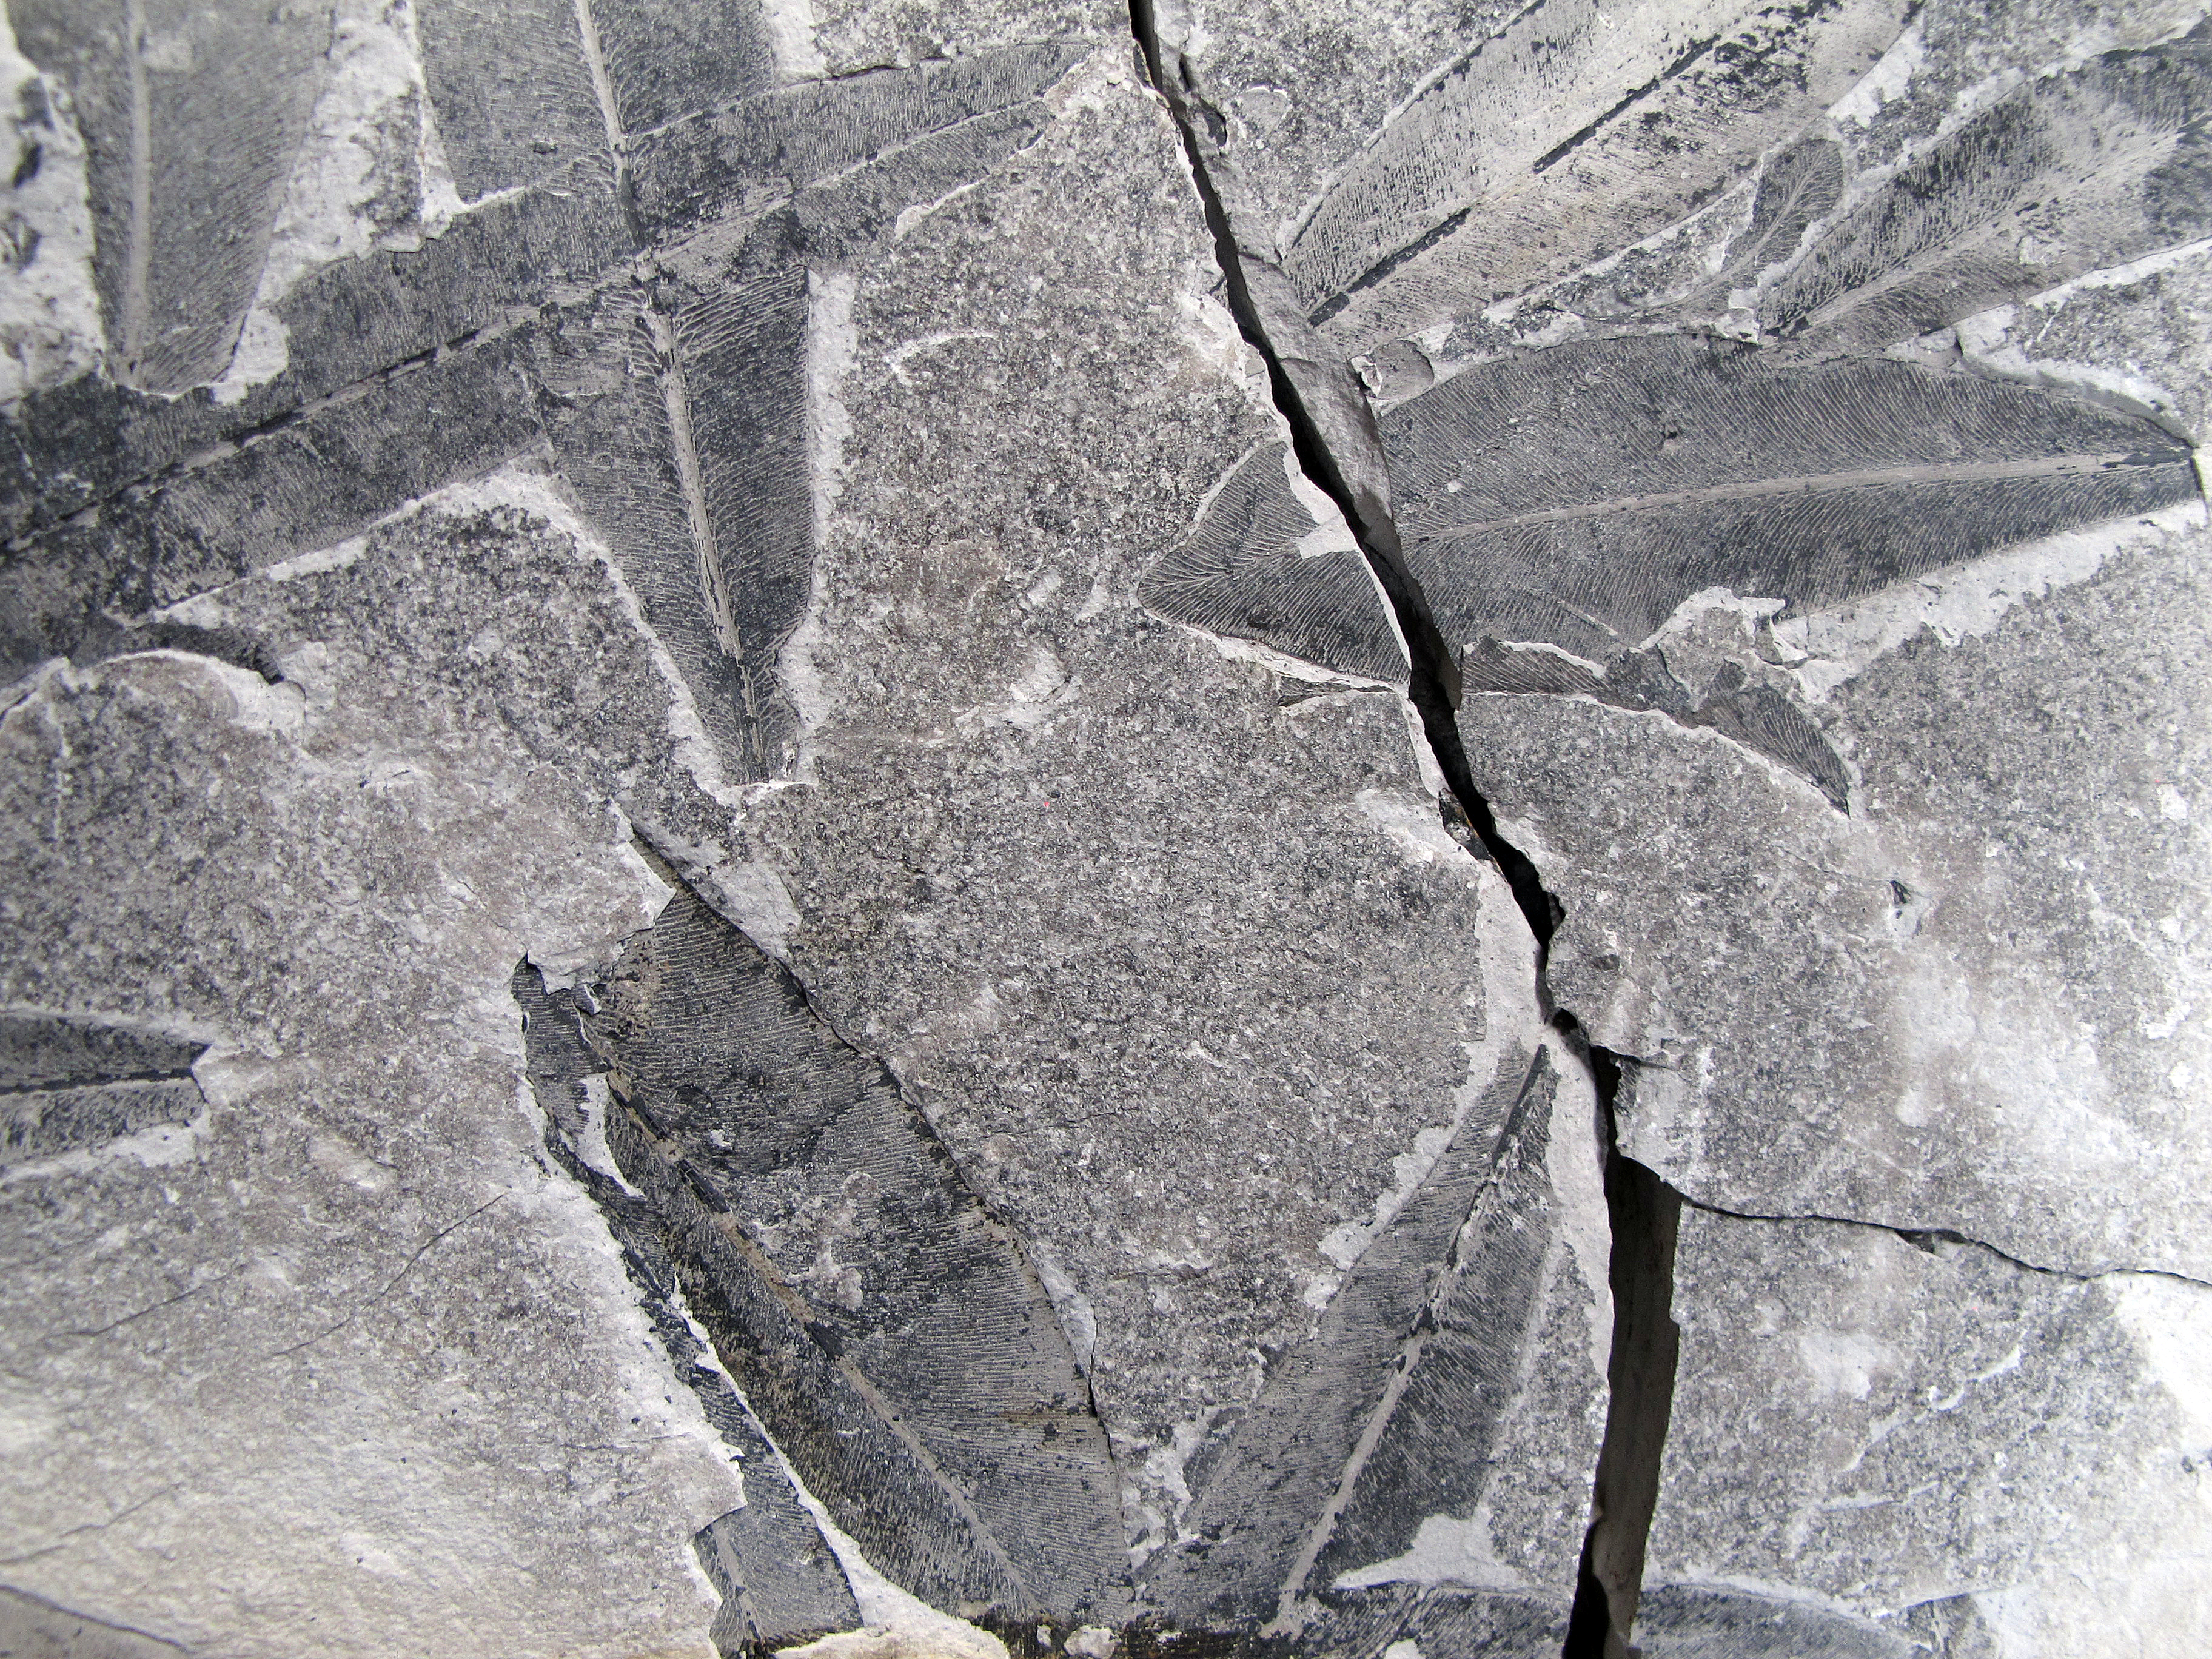 Leaf fossils in rock.